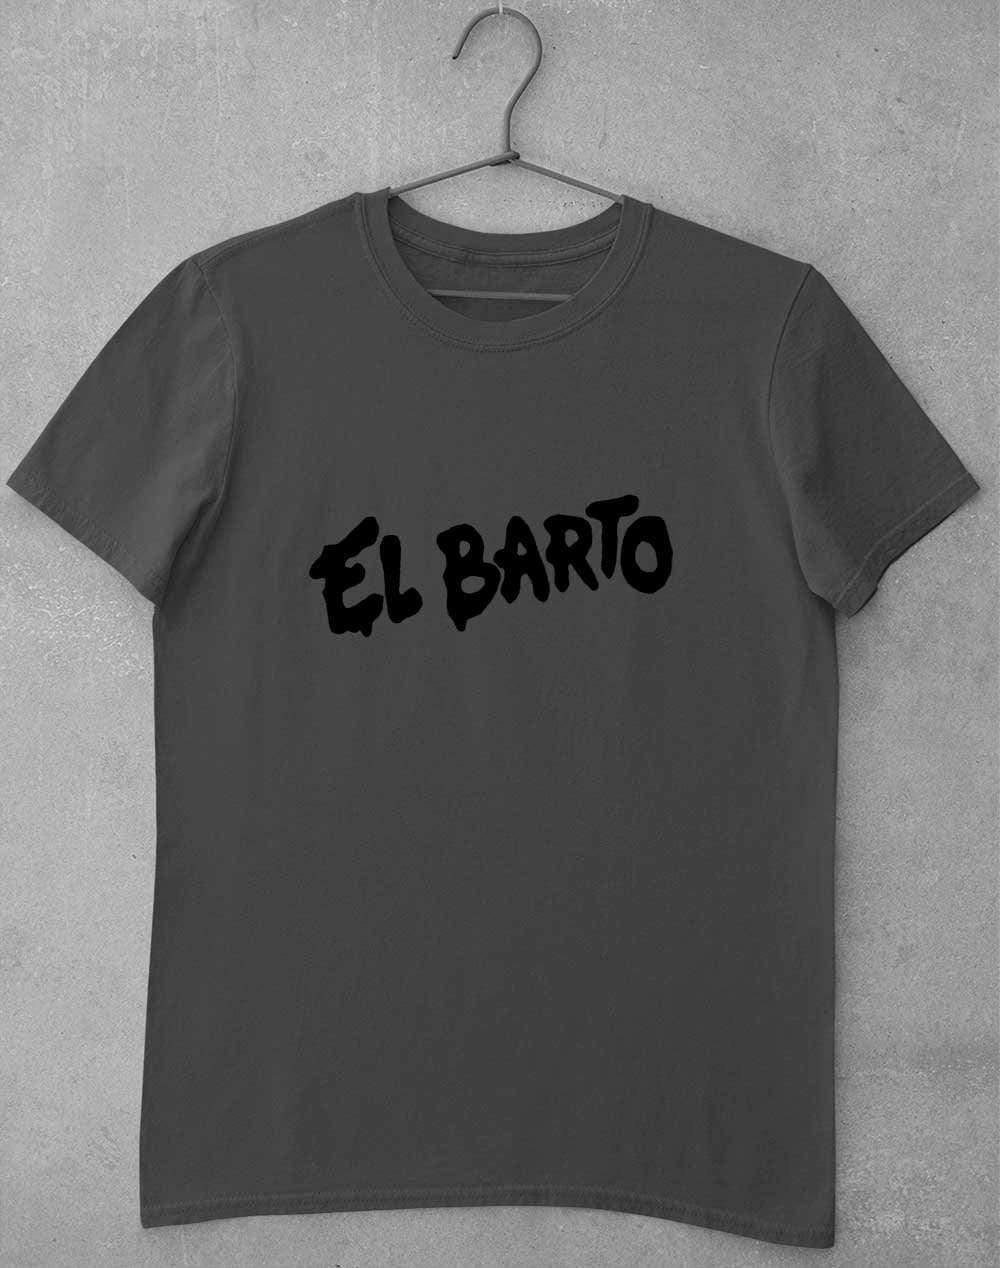 El Barto Tag T-Shirt S / Charcoal  - Off World Tees